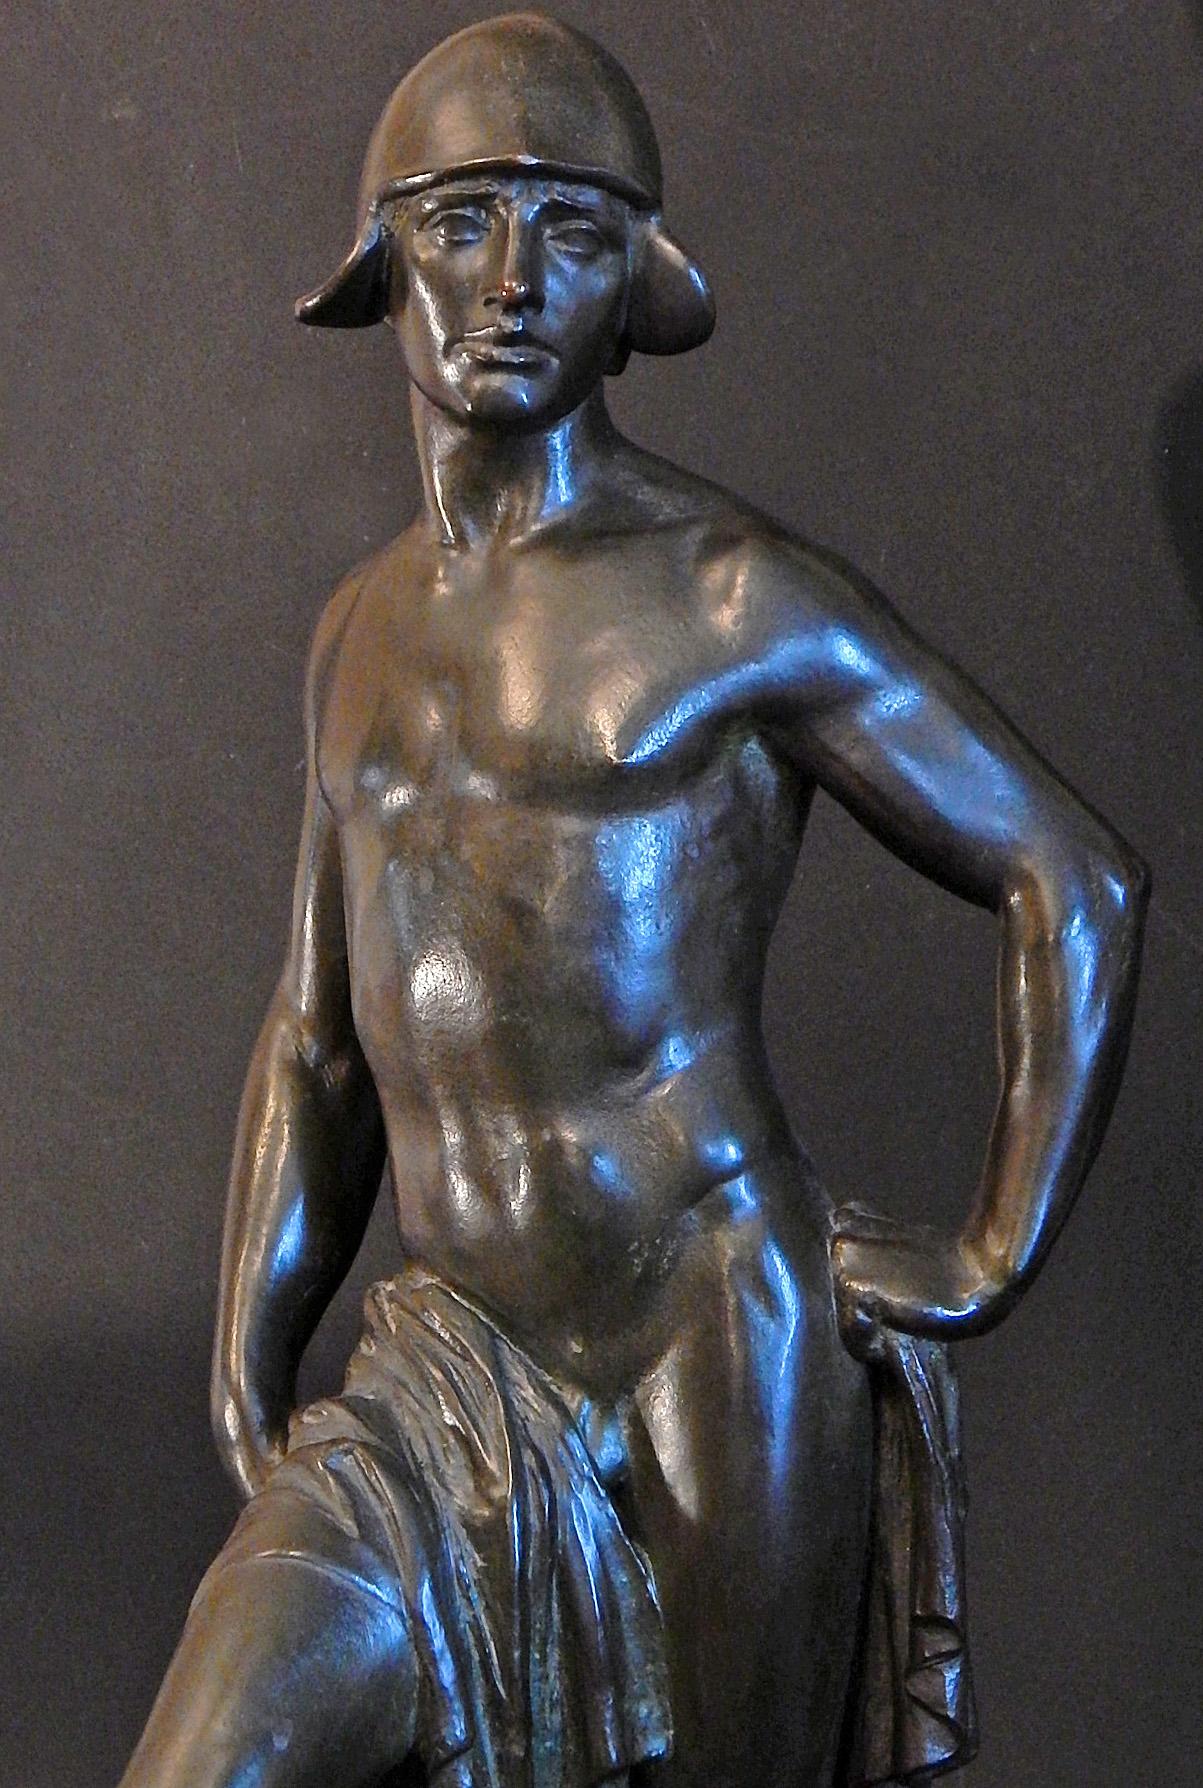 superb bronze sculptures